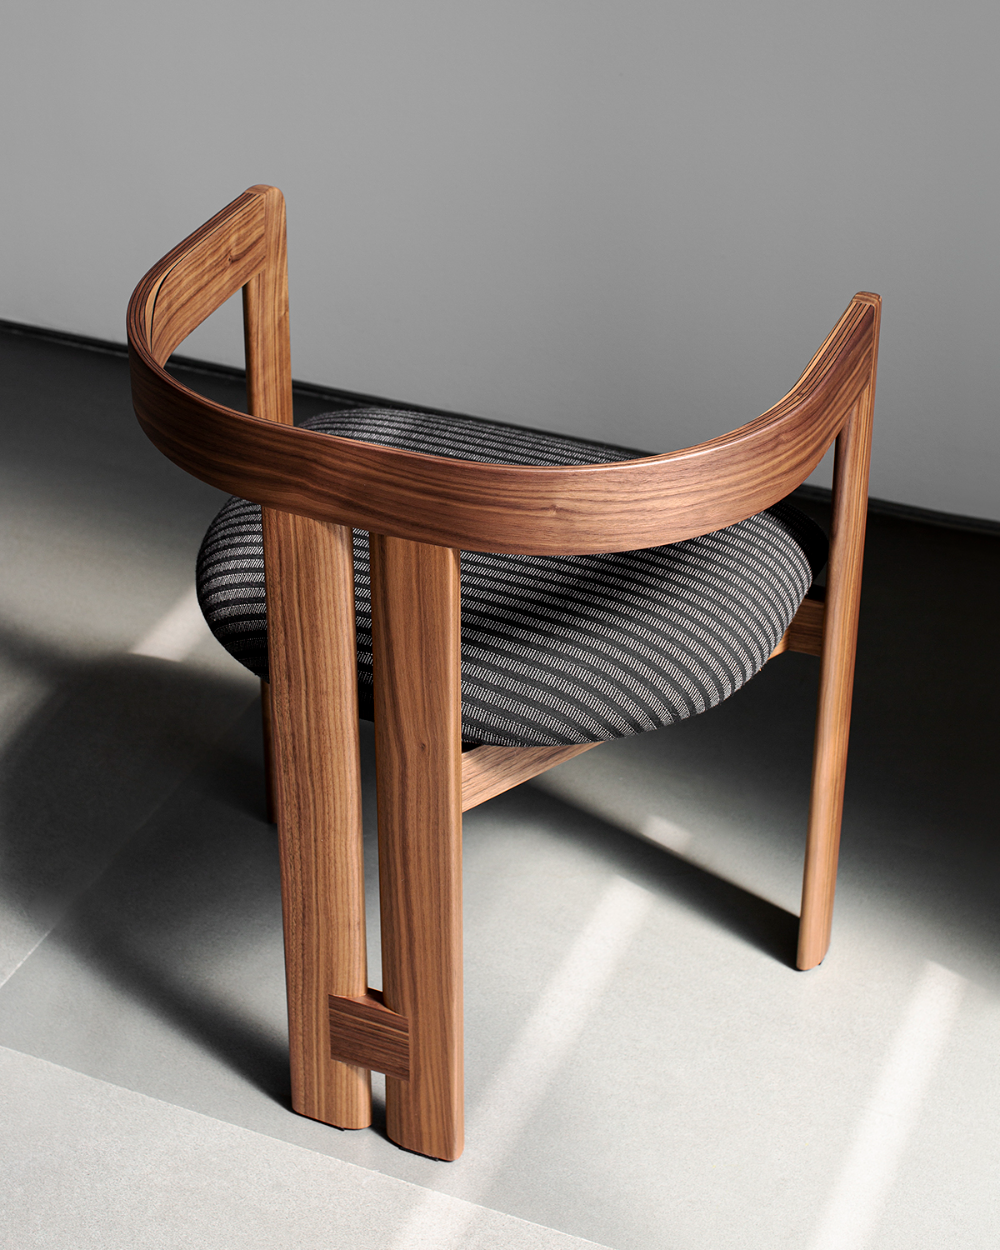 Designer Comfort: Designer Chairs for Stylish Living